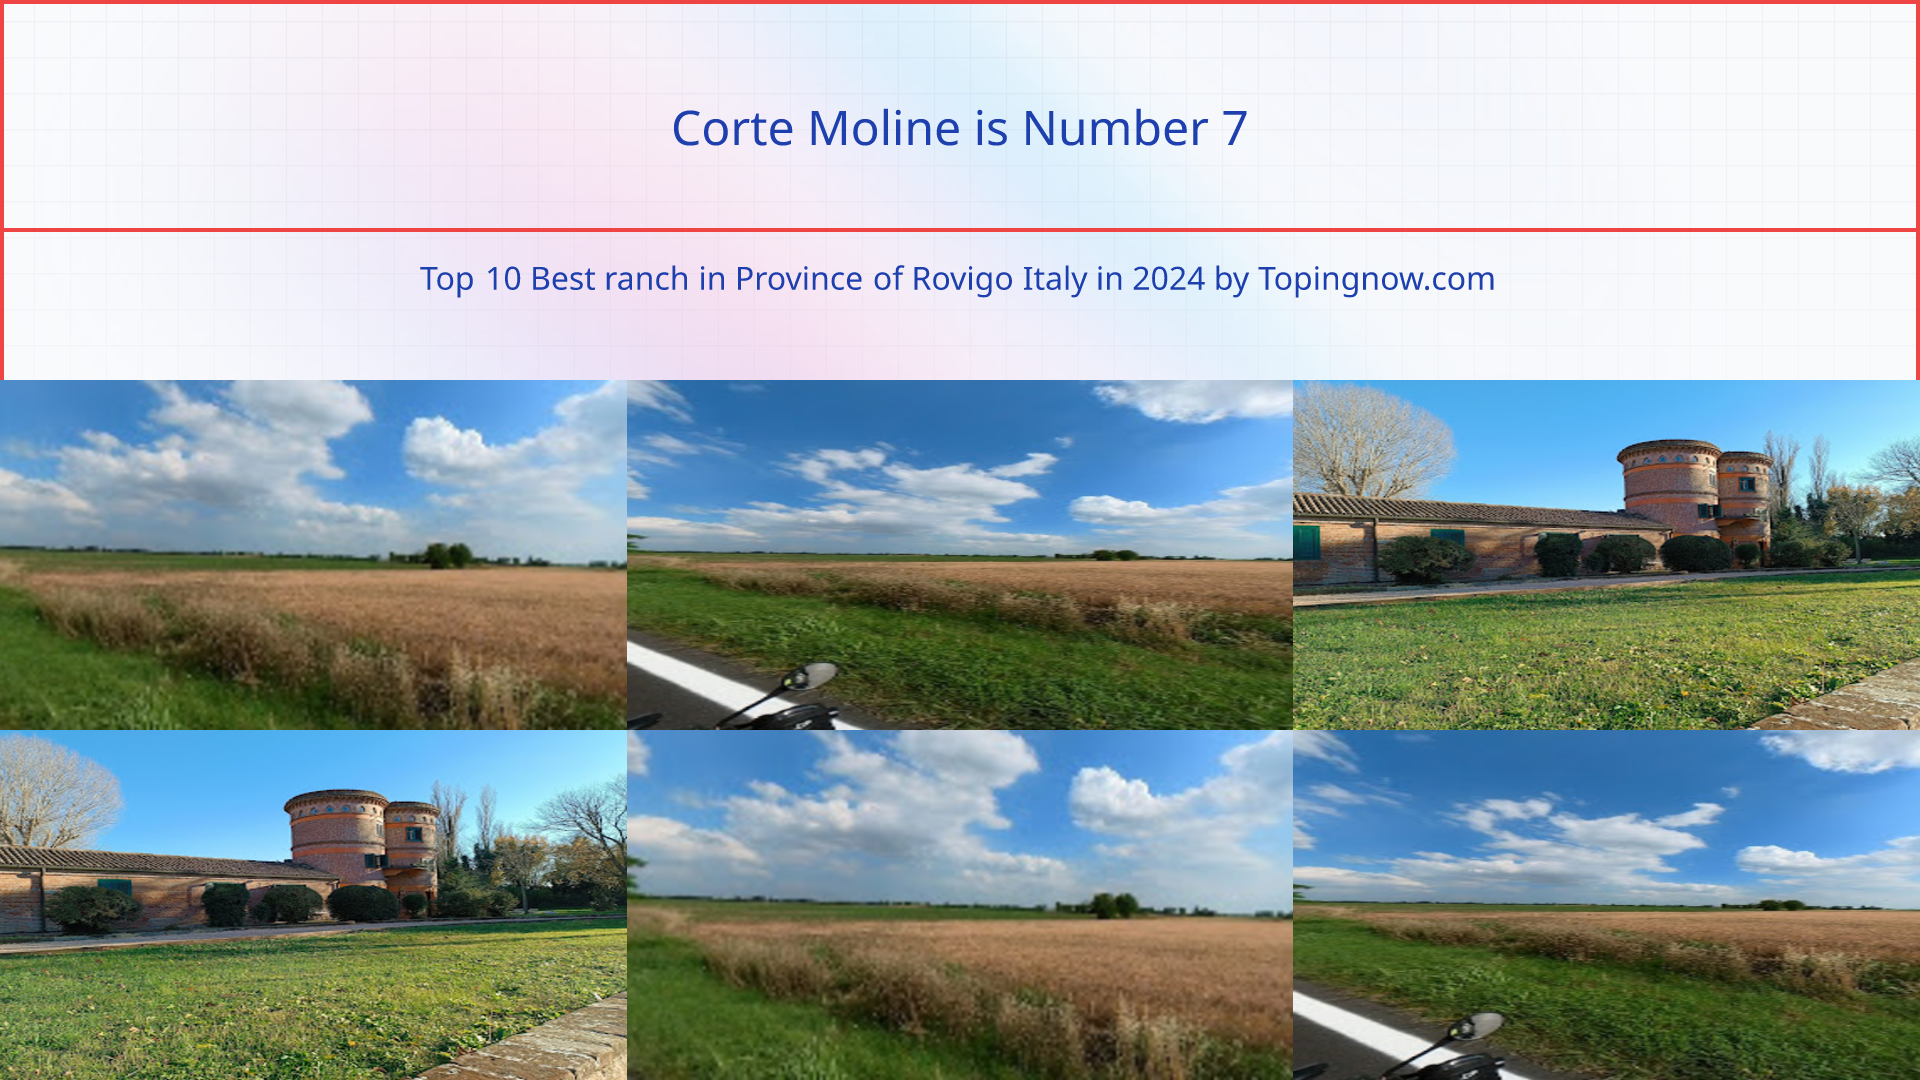 Corte Moline: Top 10 Best ranch in Province of Rovigo Italy in 2024